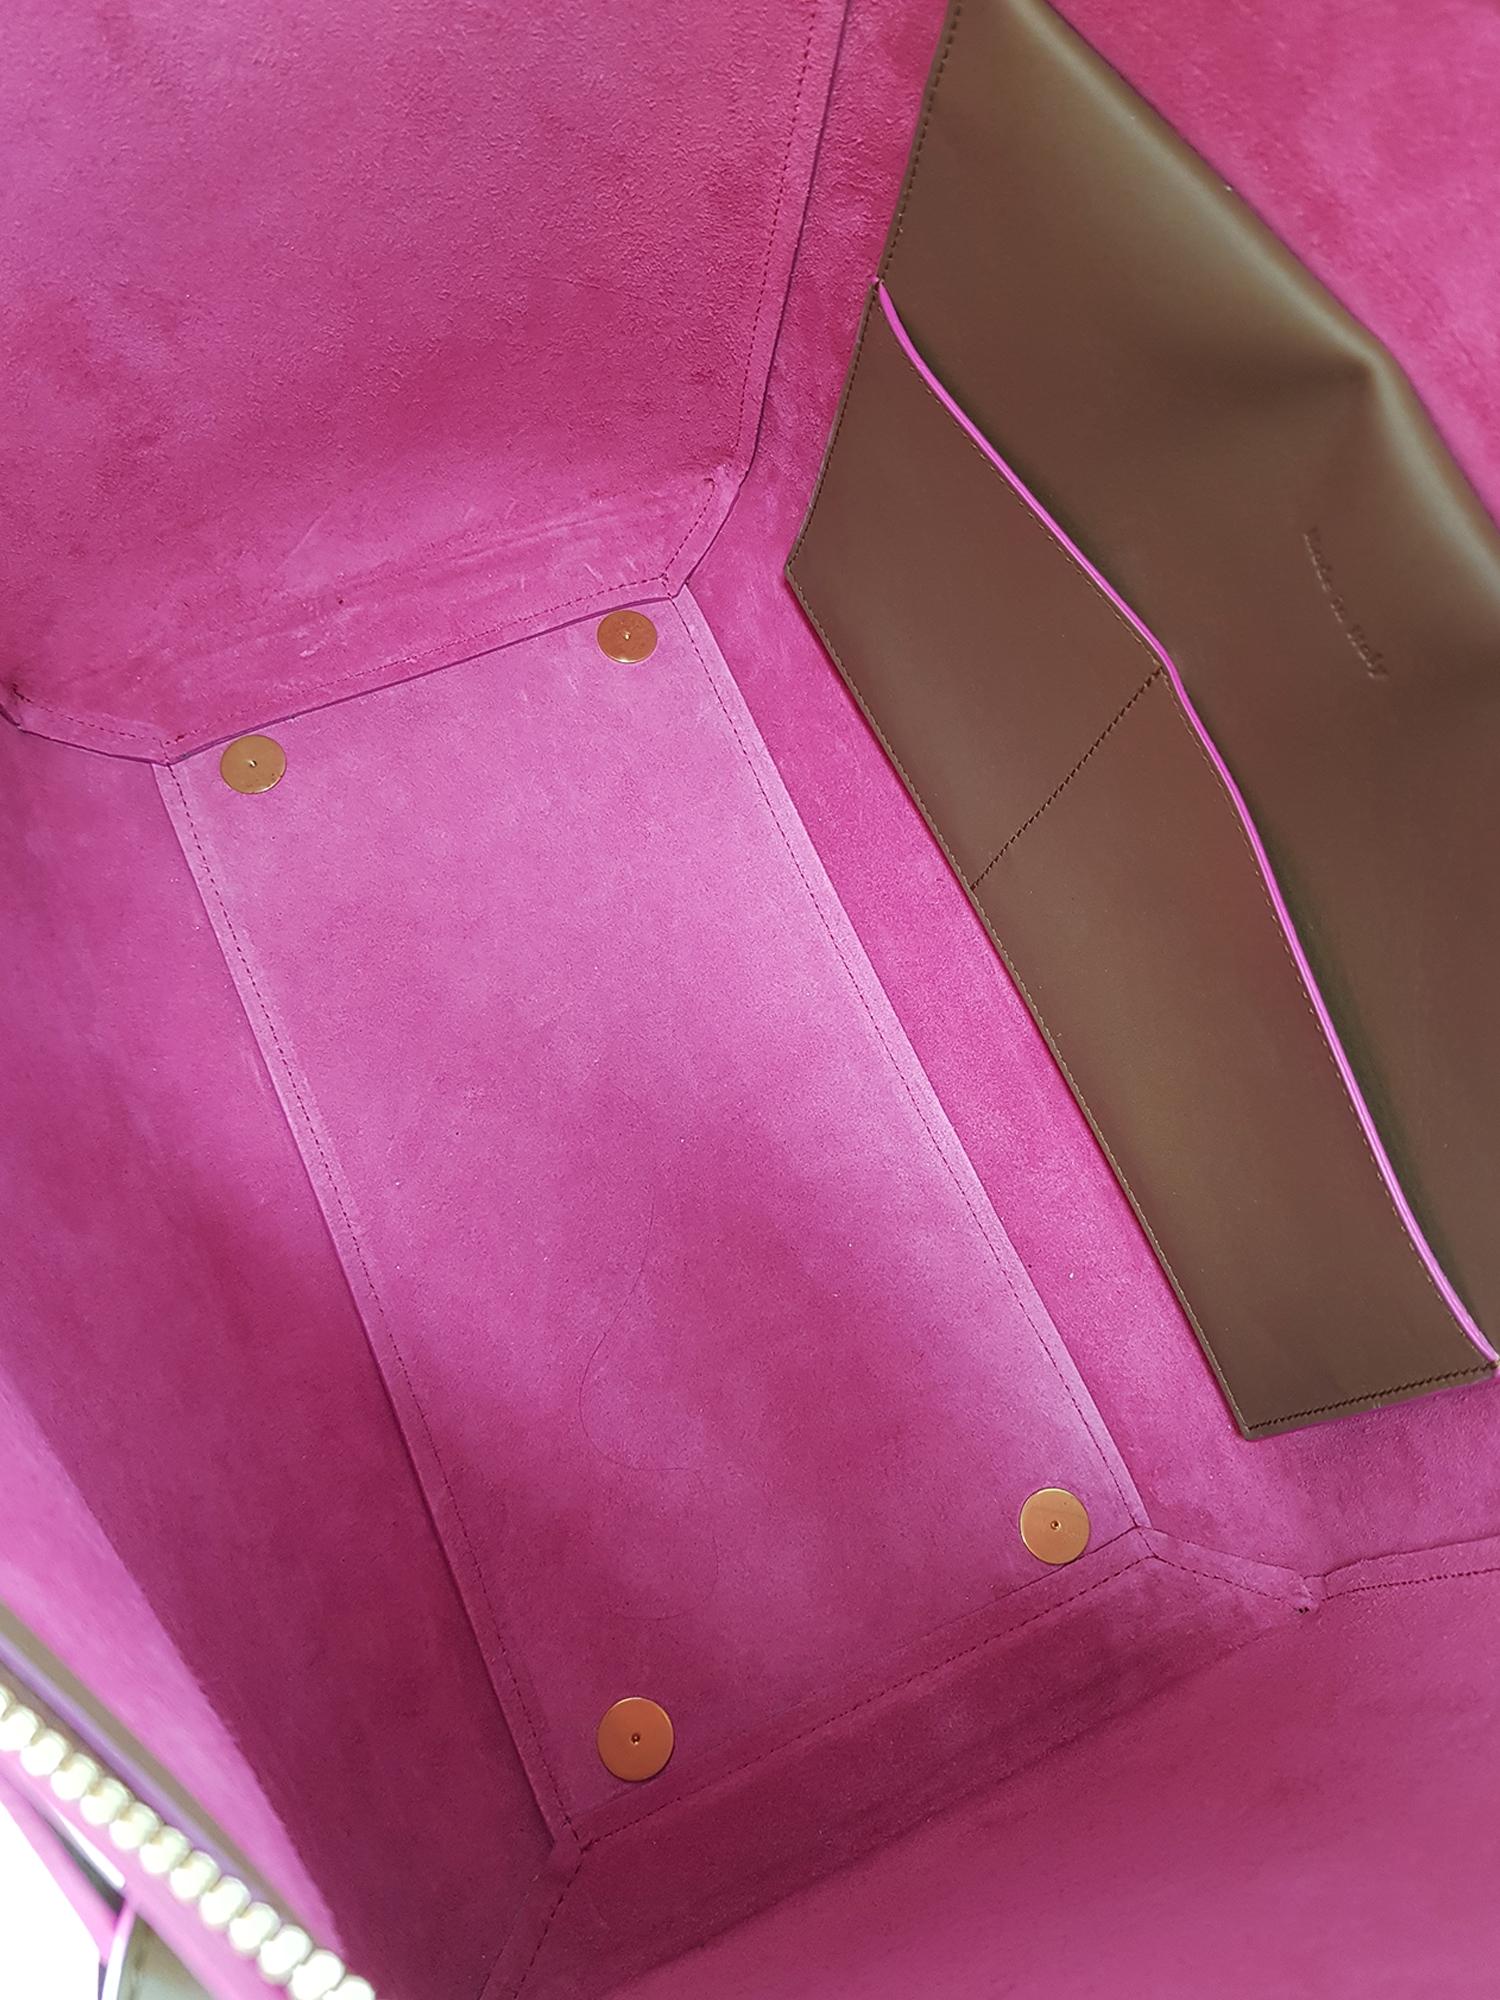 Celine Women's Handbag Belt Bag Brown/Pink Leather In Excellent Condition For Sale In Milan, IT